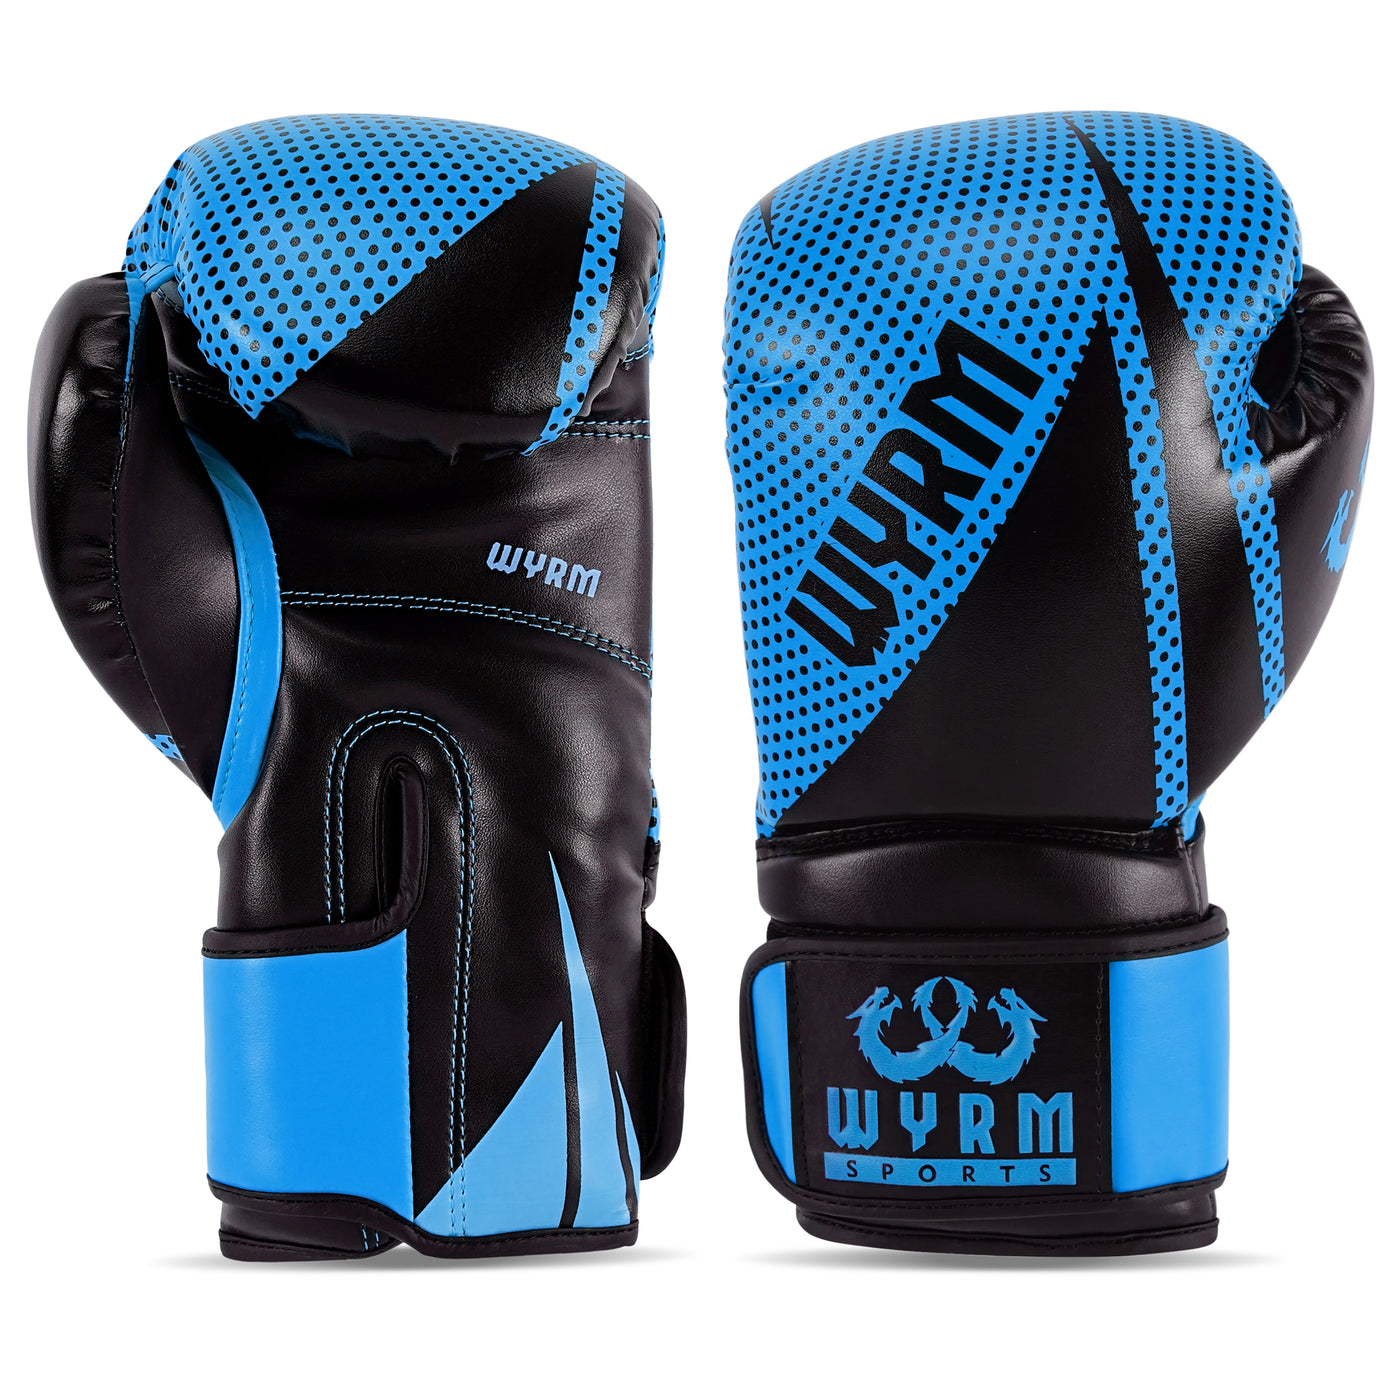 Krusher Blue/Black Leather Boxing Gloves